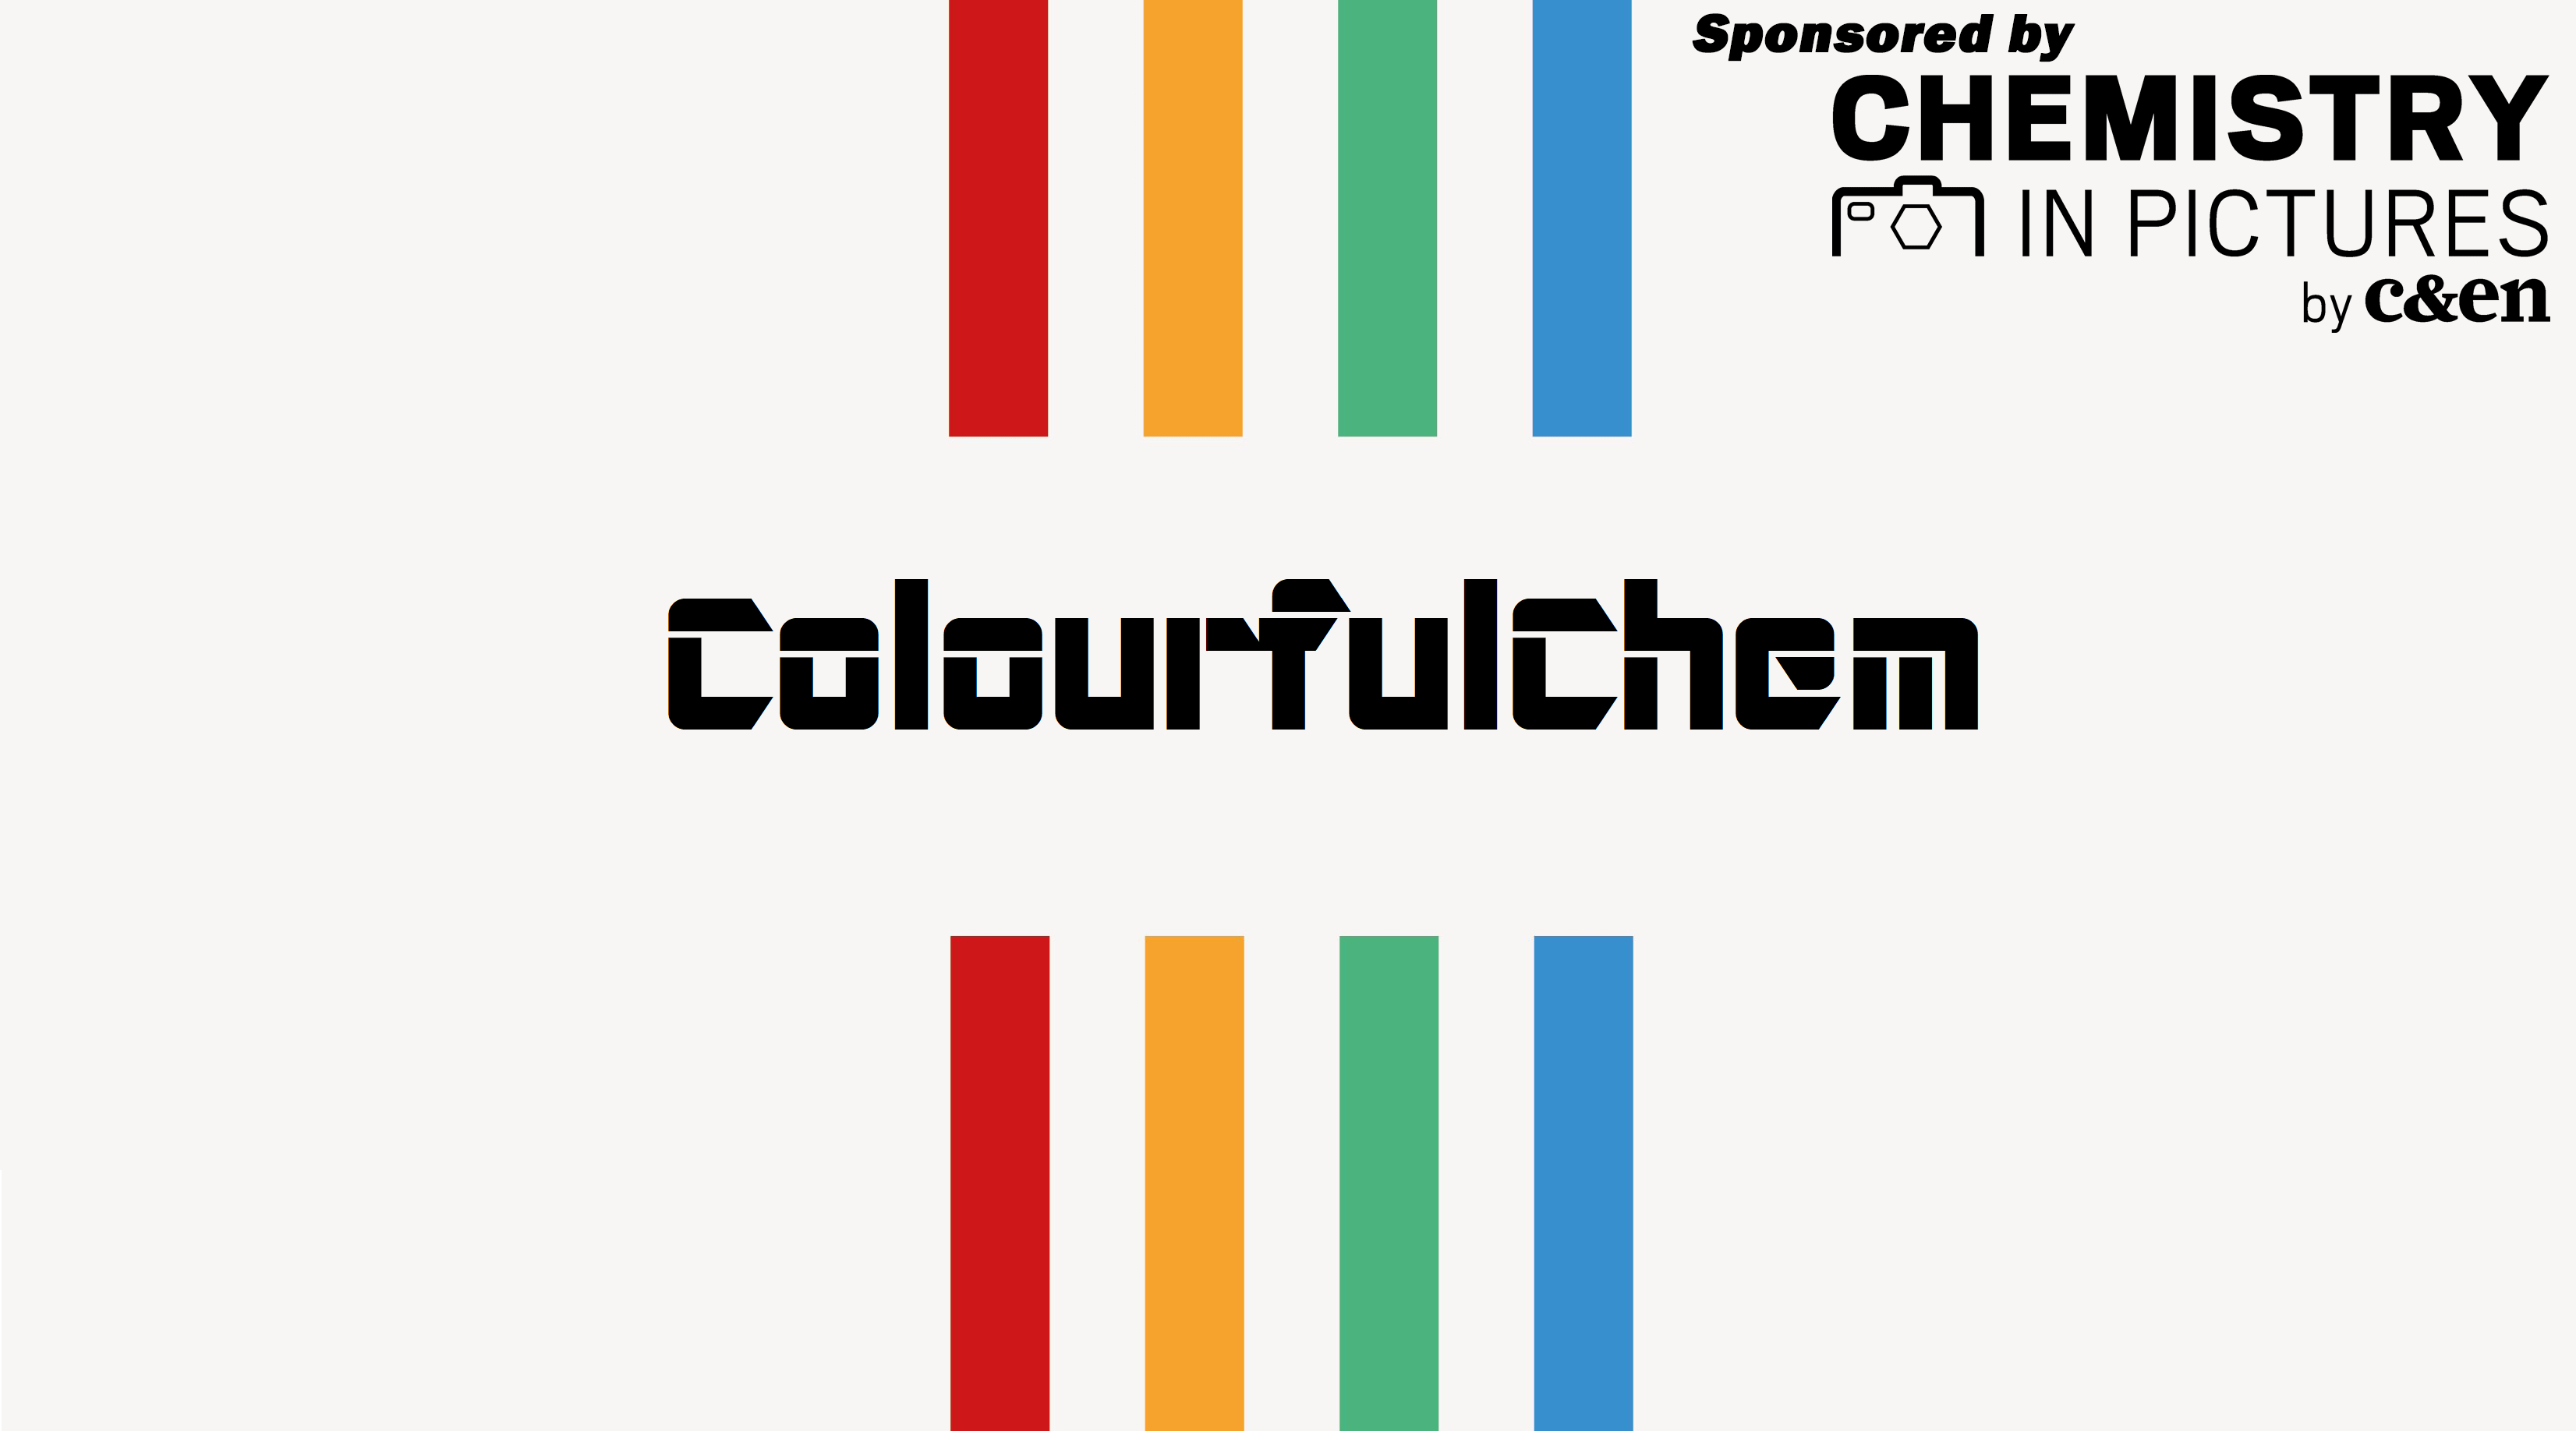 colourfulchem